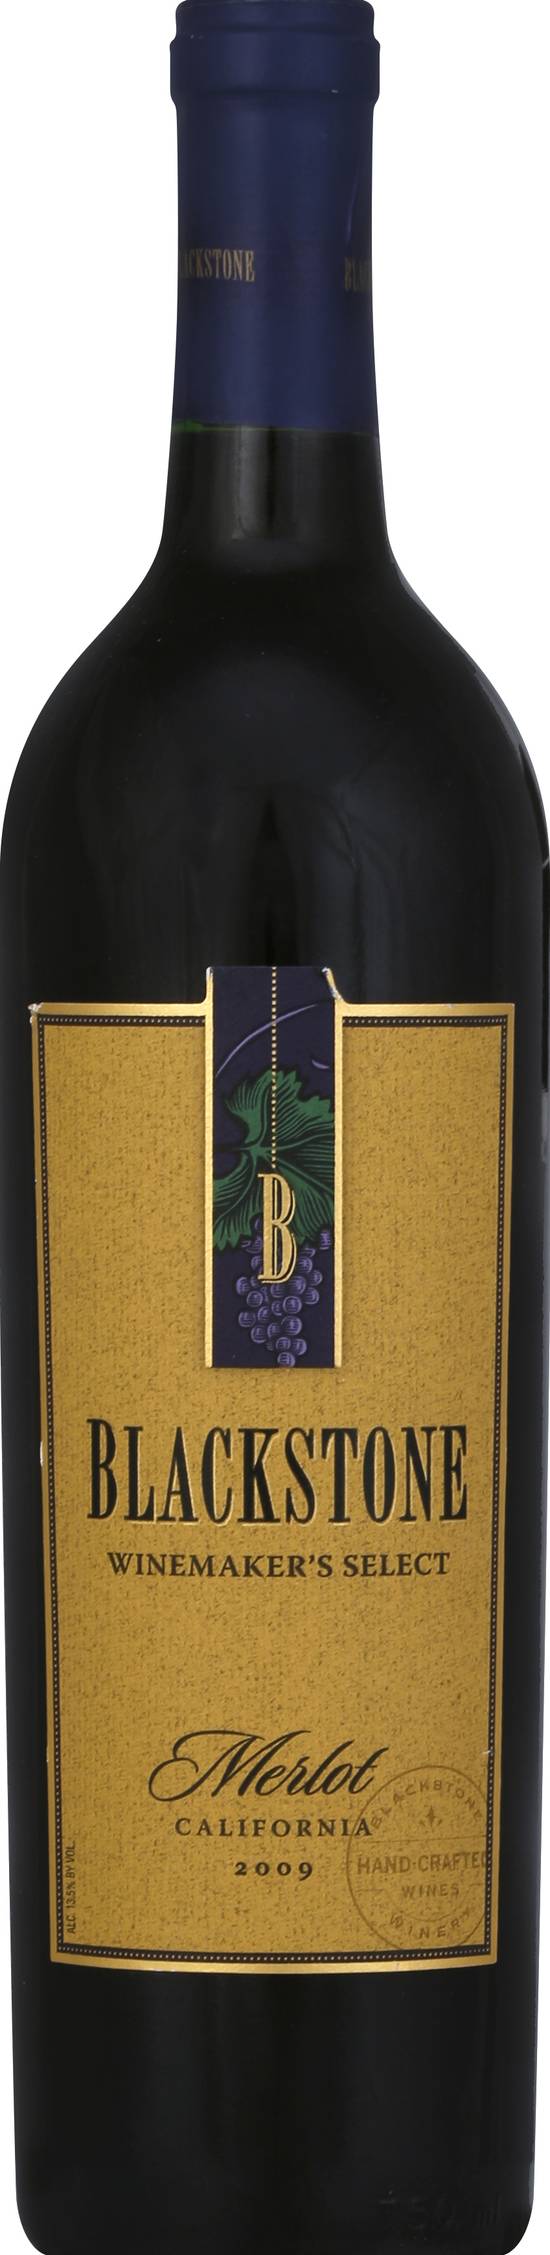 Blackstone Winemaker's Select Merlot California Wine 2009 (750 ml)